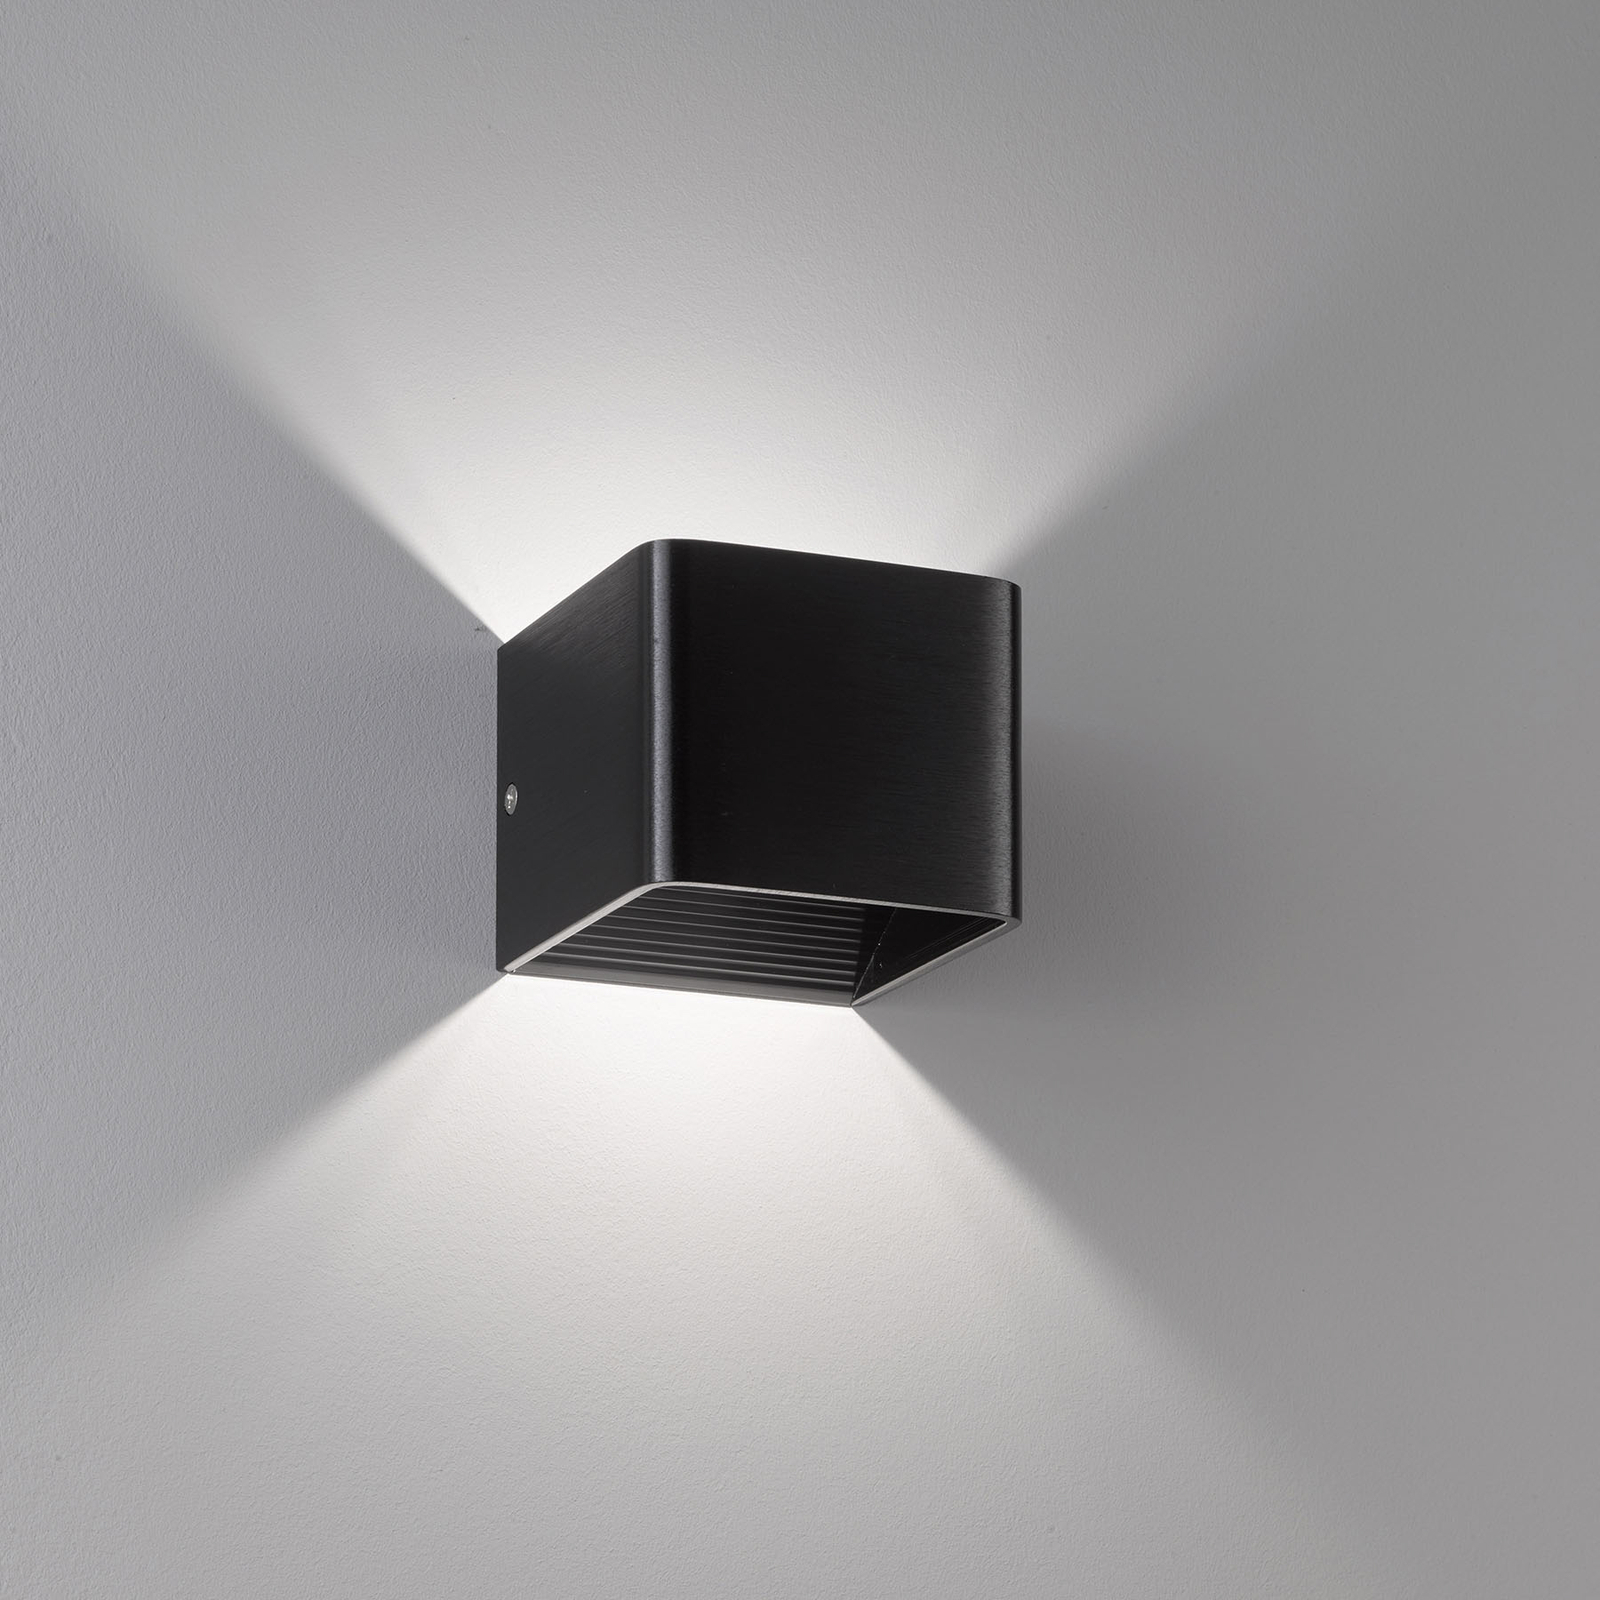 LED-vägglampa Dan, svart anodiserad